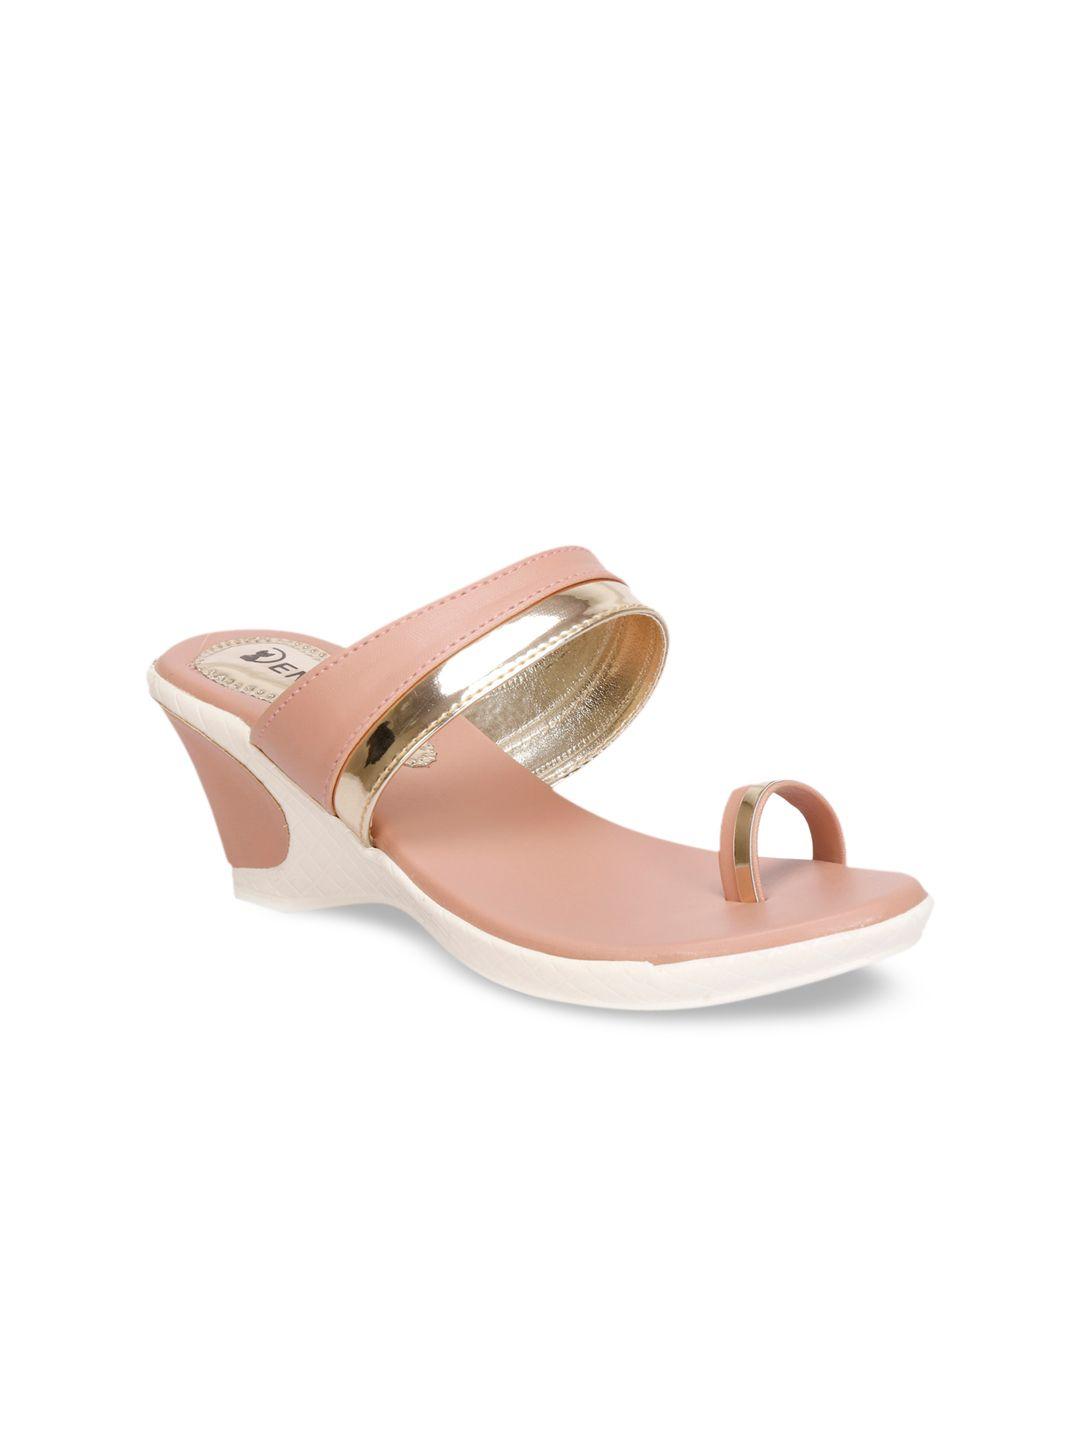 denill women peach & gold-toned colourblocked wedge sandals